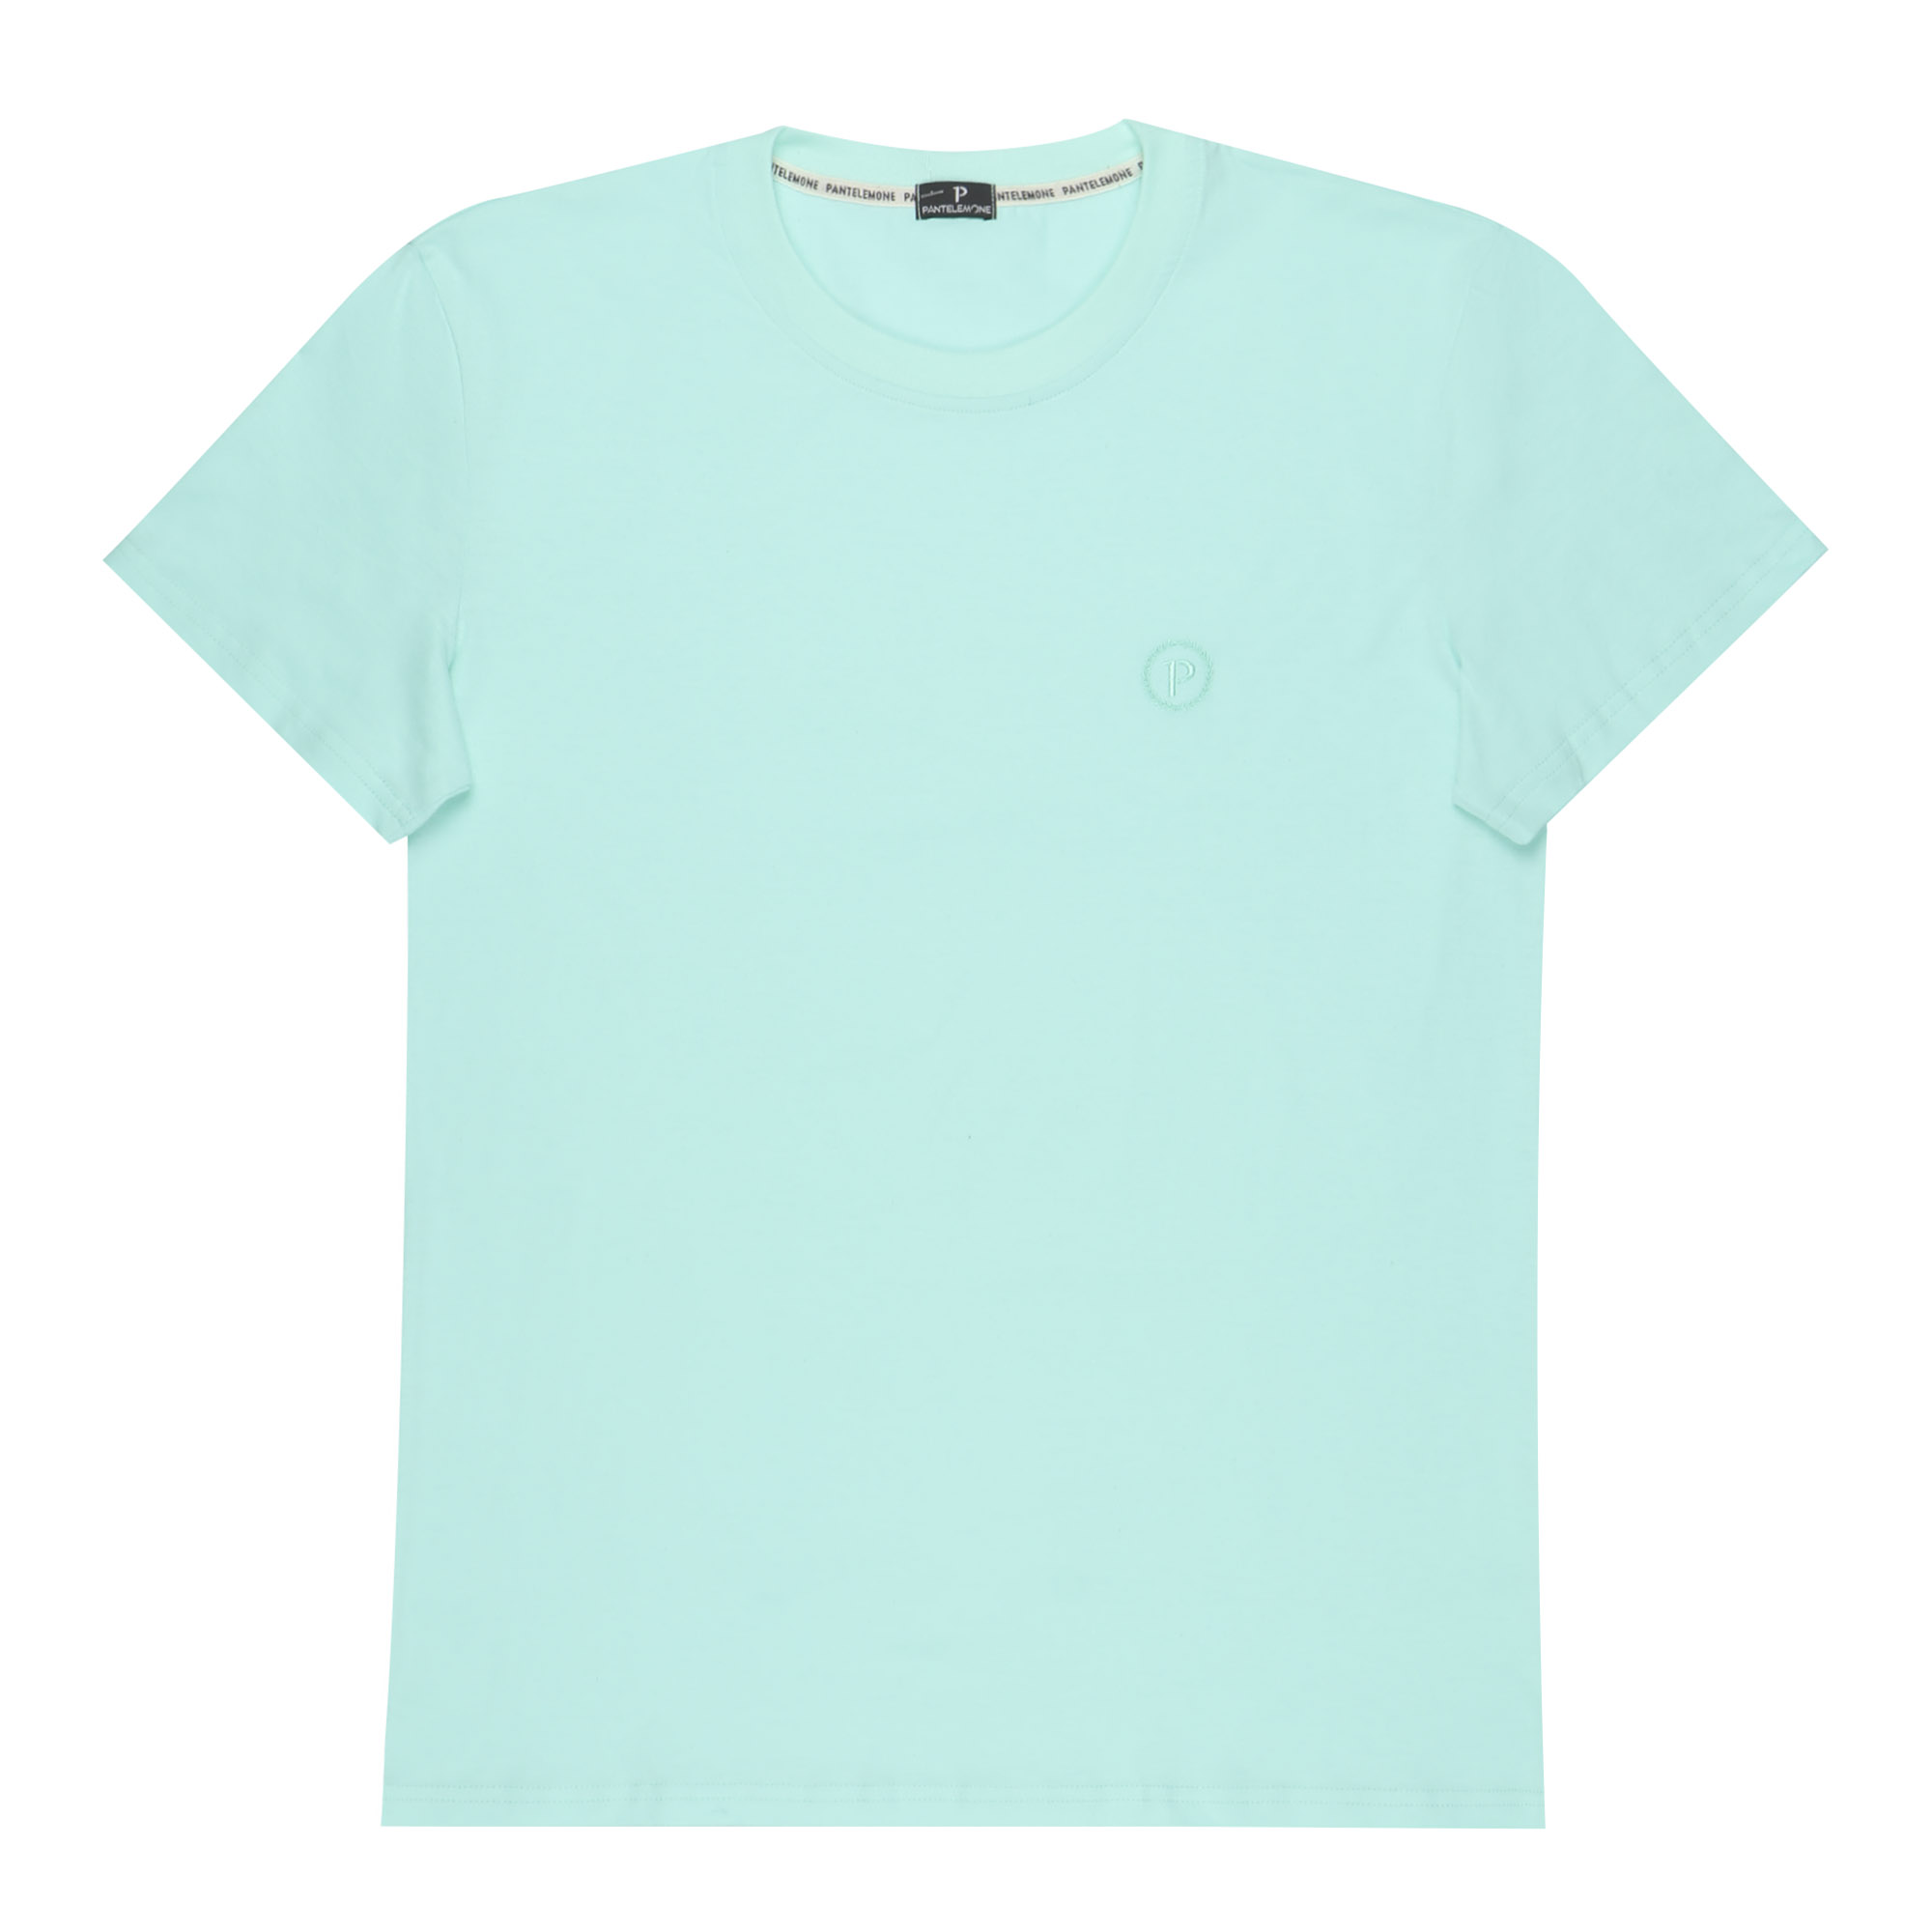 Мужская футболка Pantelemone MF-913 48 ментоловая, цвет ментоловый, размер 48 - фото 1